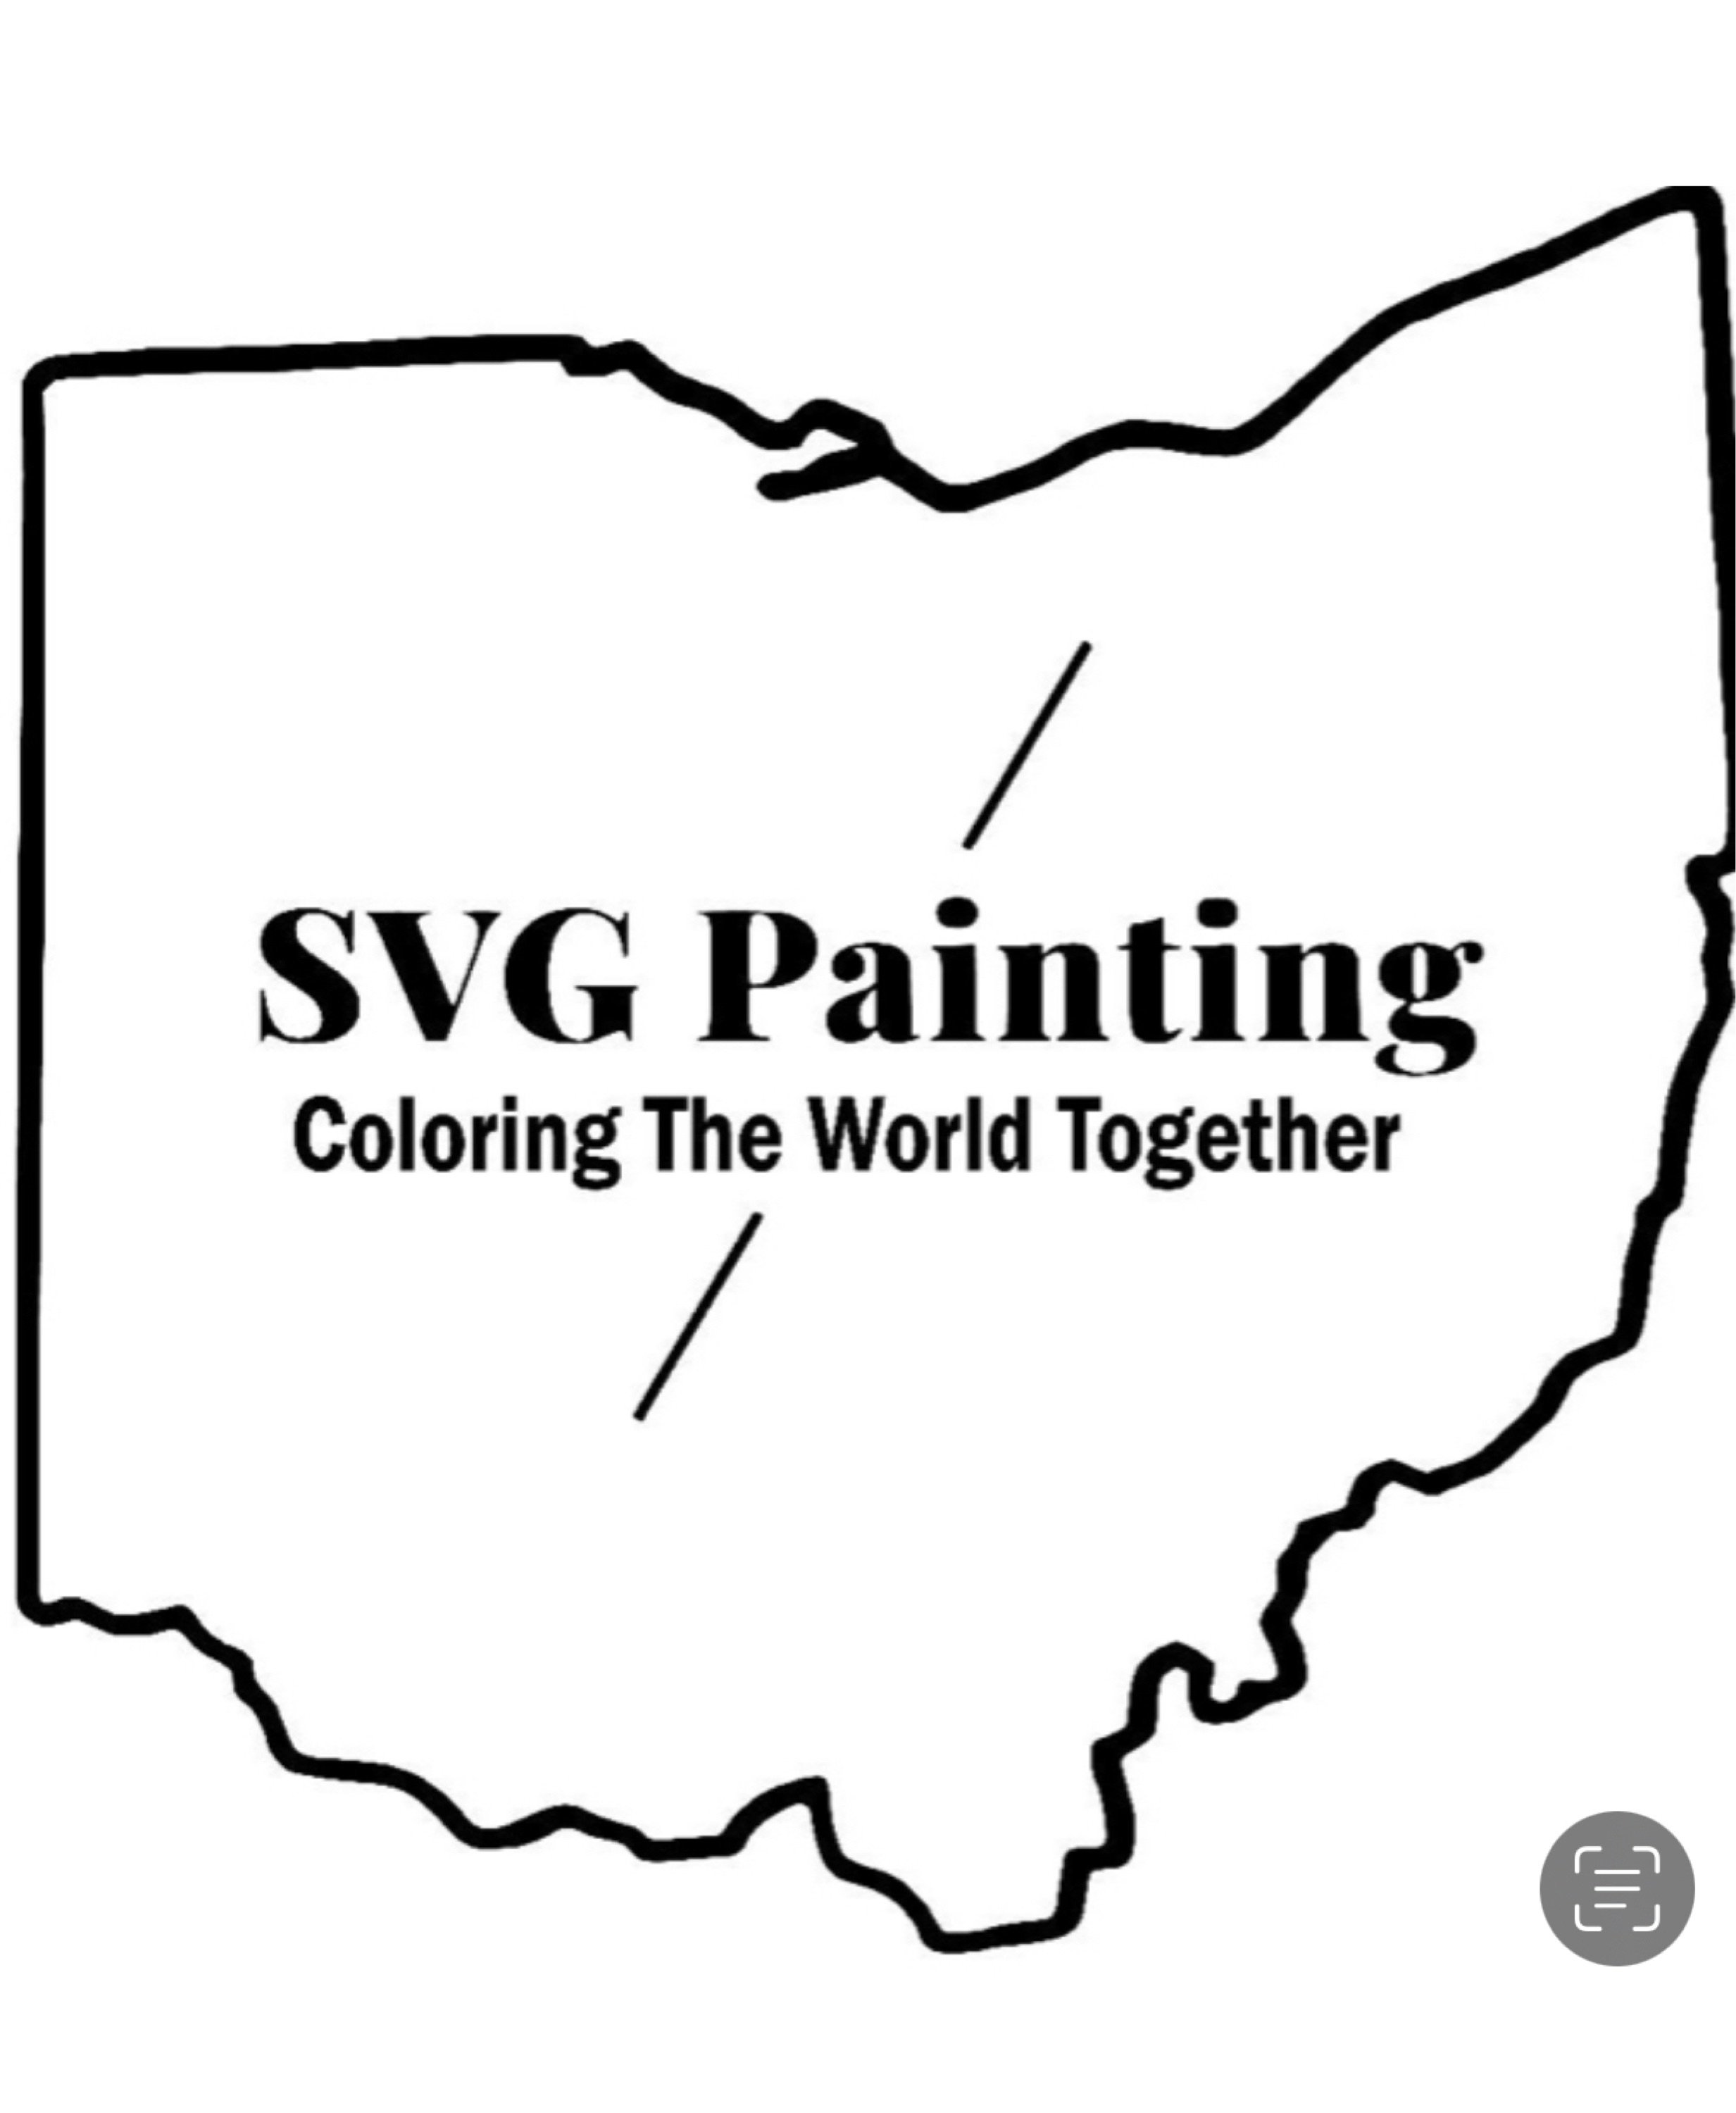 SVG Painting Logo